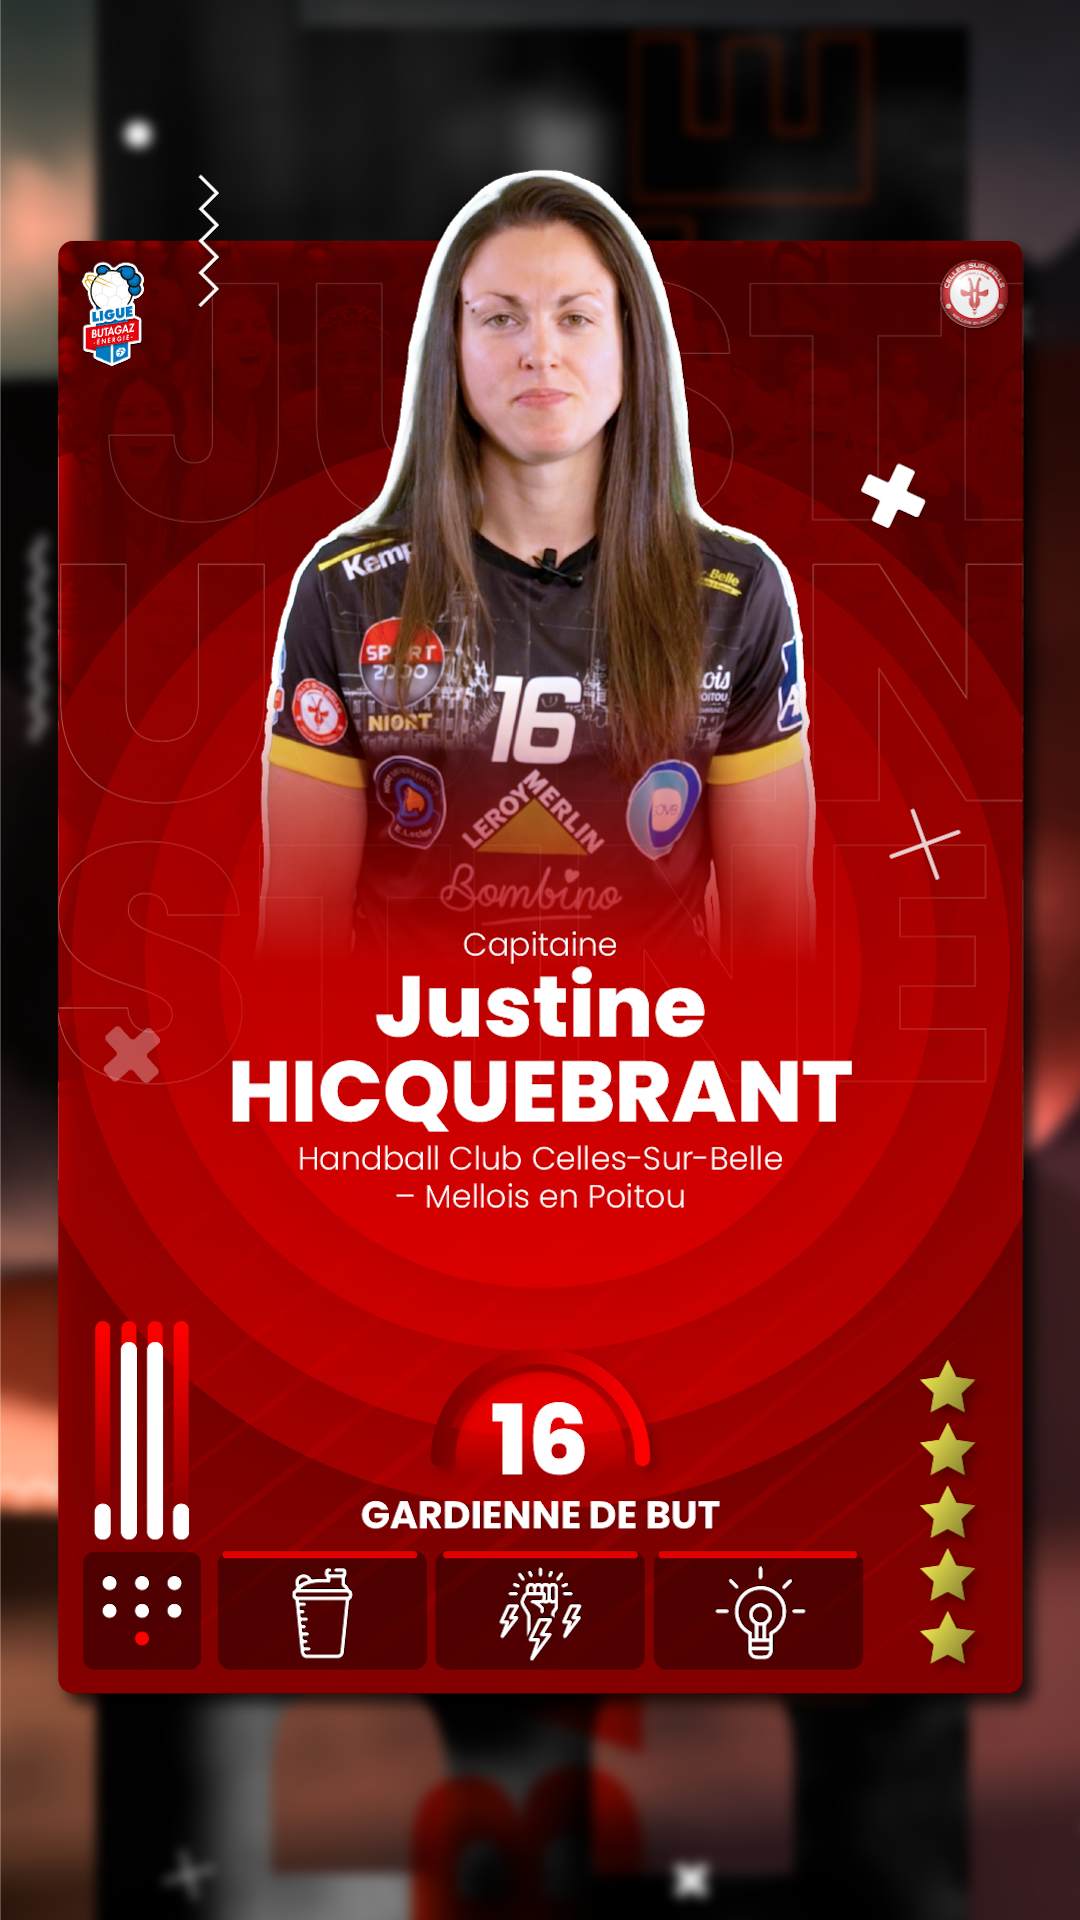 Justine Hicquebrant, capitaine du Handbal Club Celles-sur-Belle 